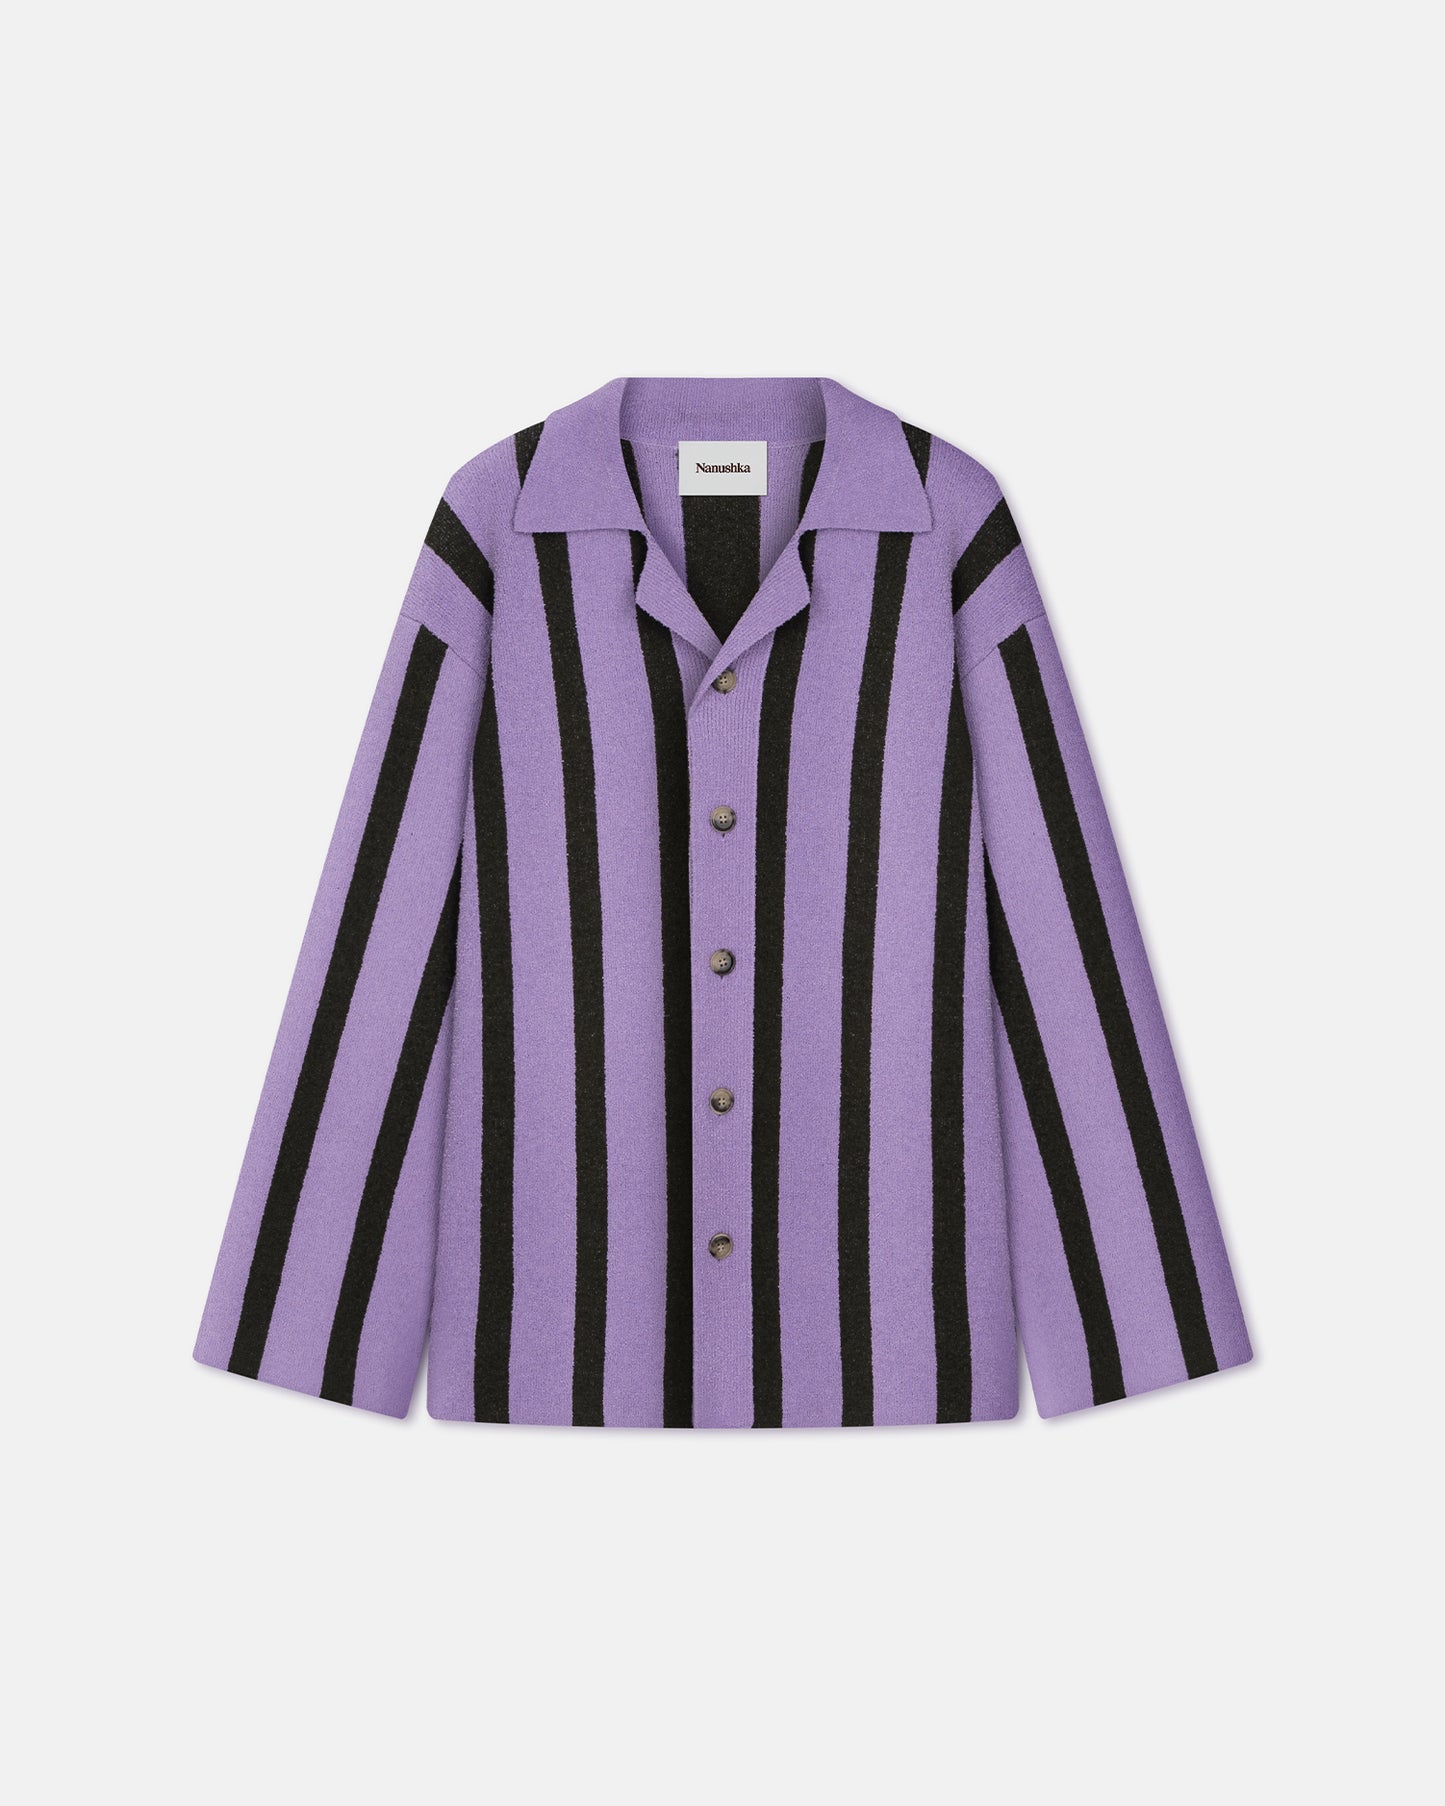 Almar - Cotton-Terry Shirt - Stripe Dark Khaki Lilac